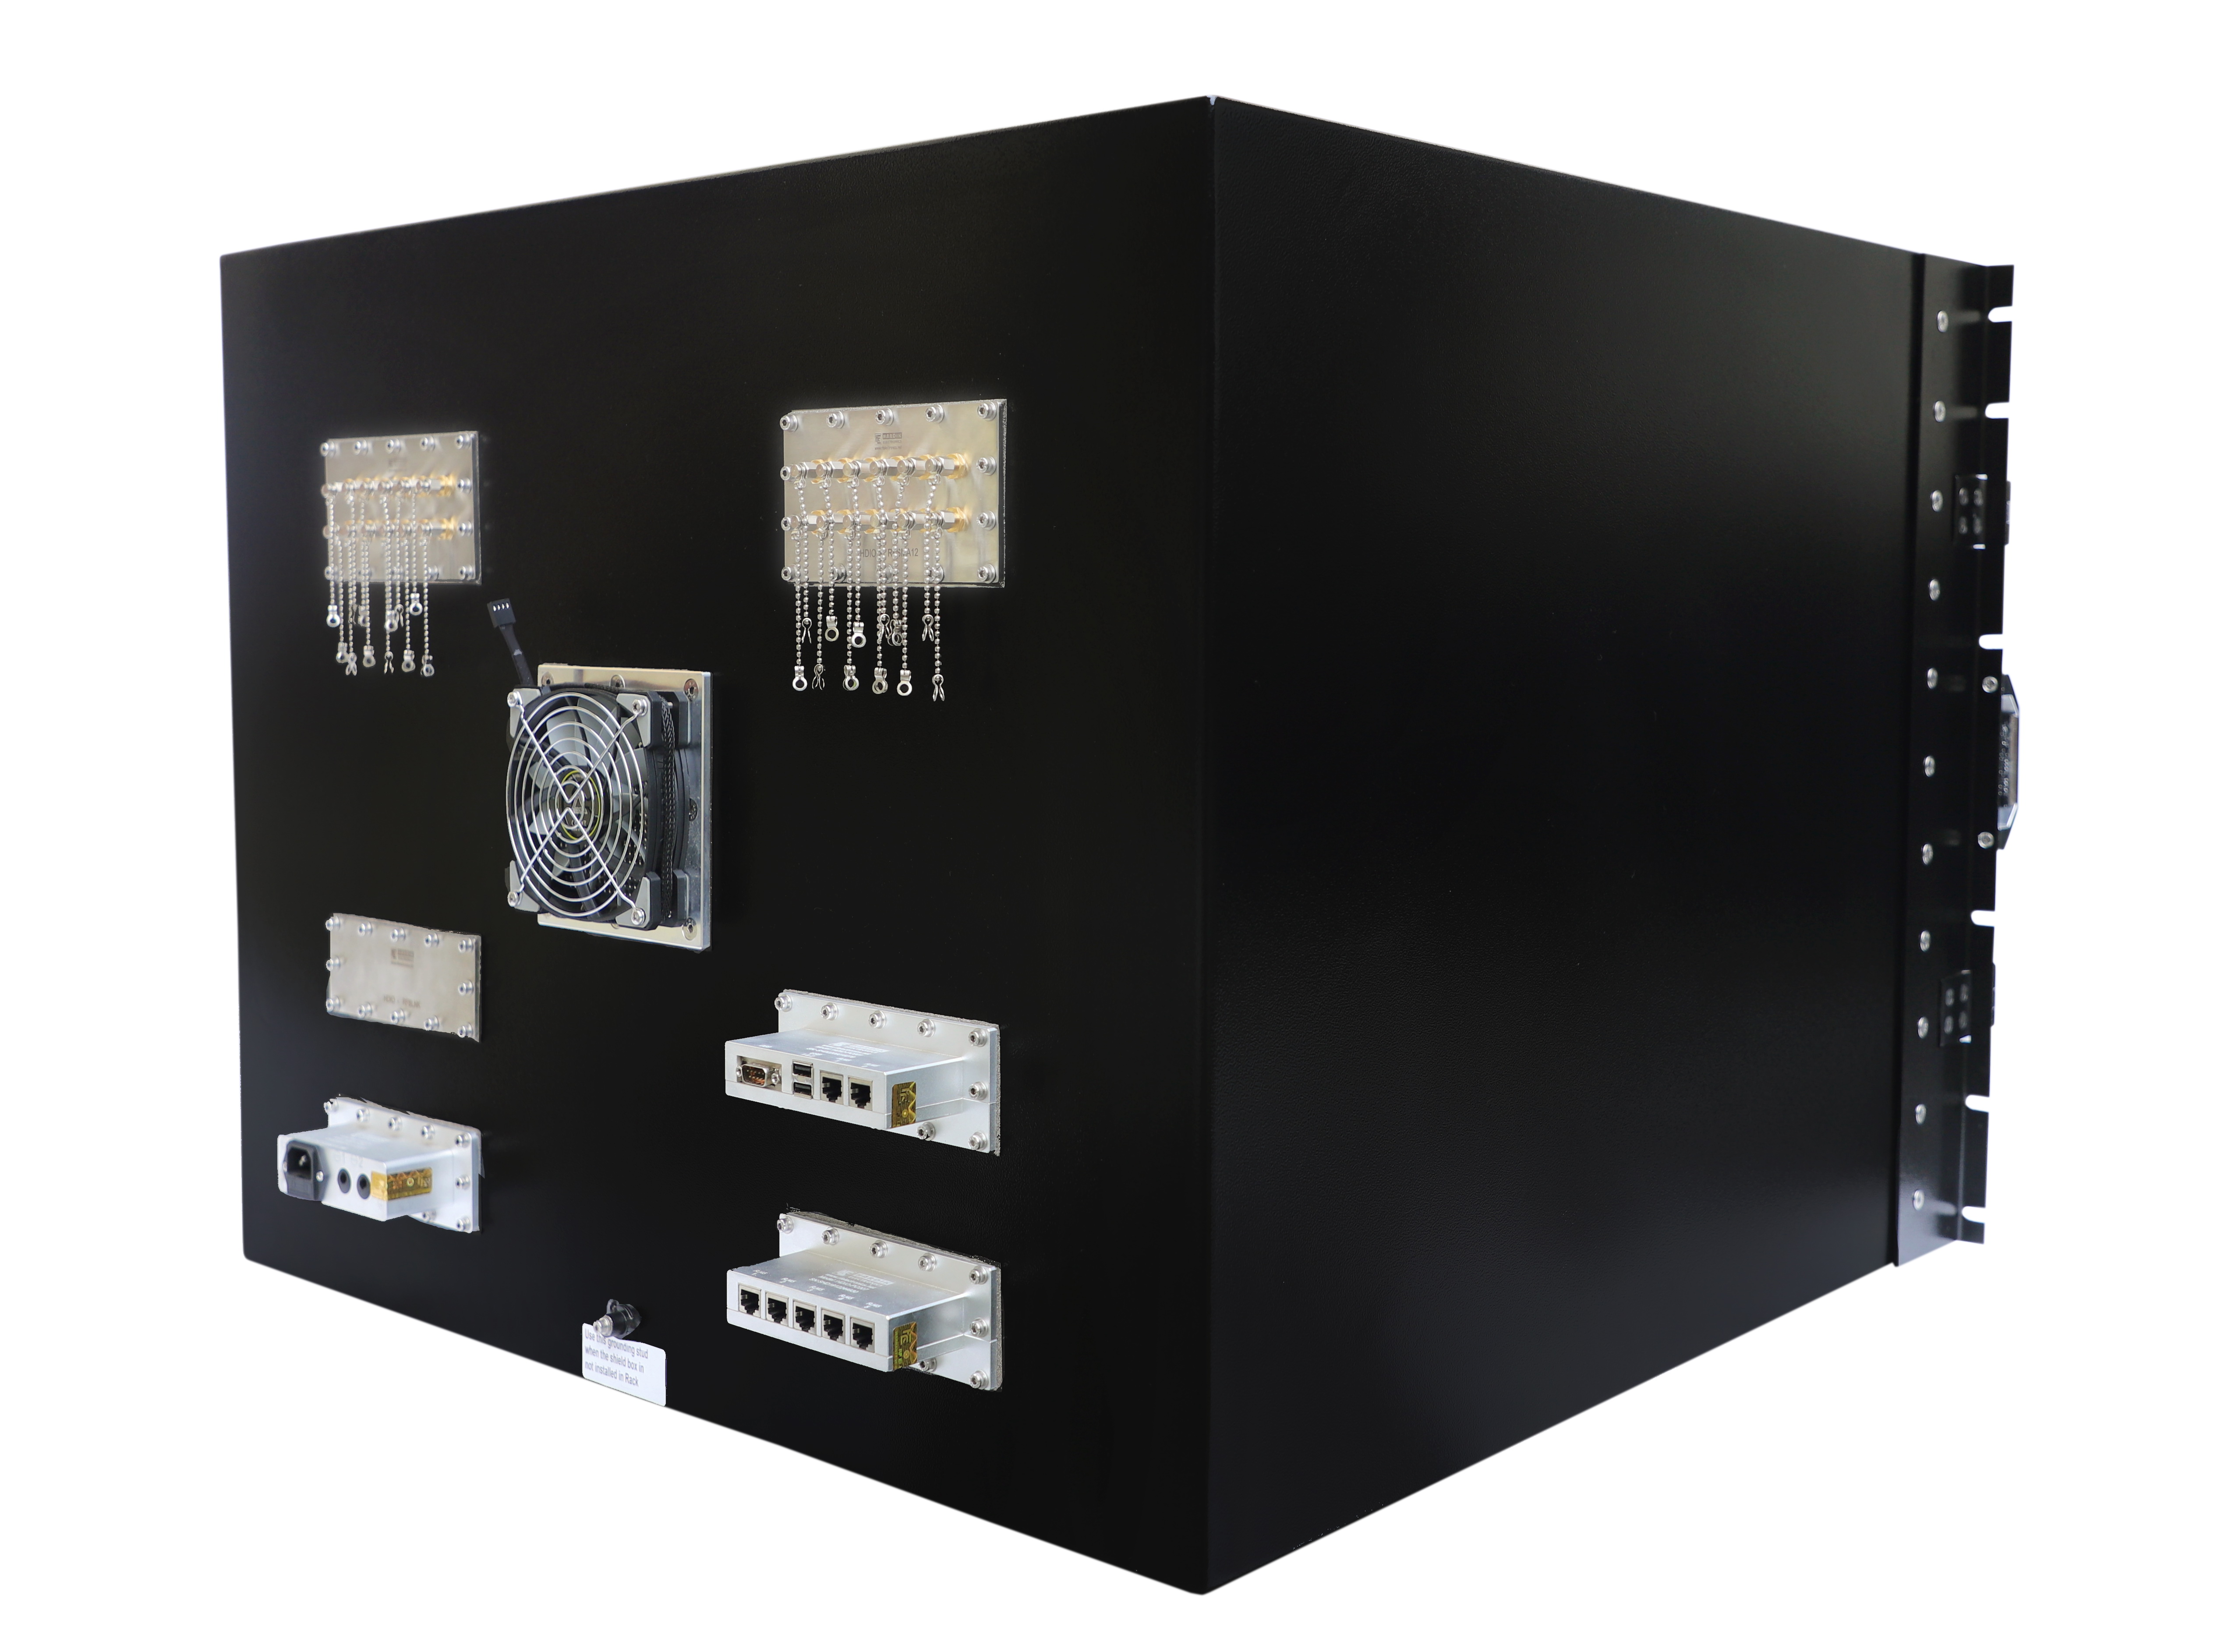 HDRF-3170-M RF Shield Test Box